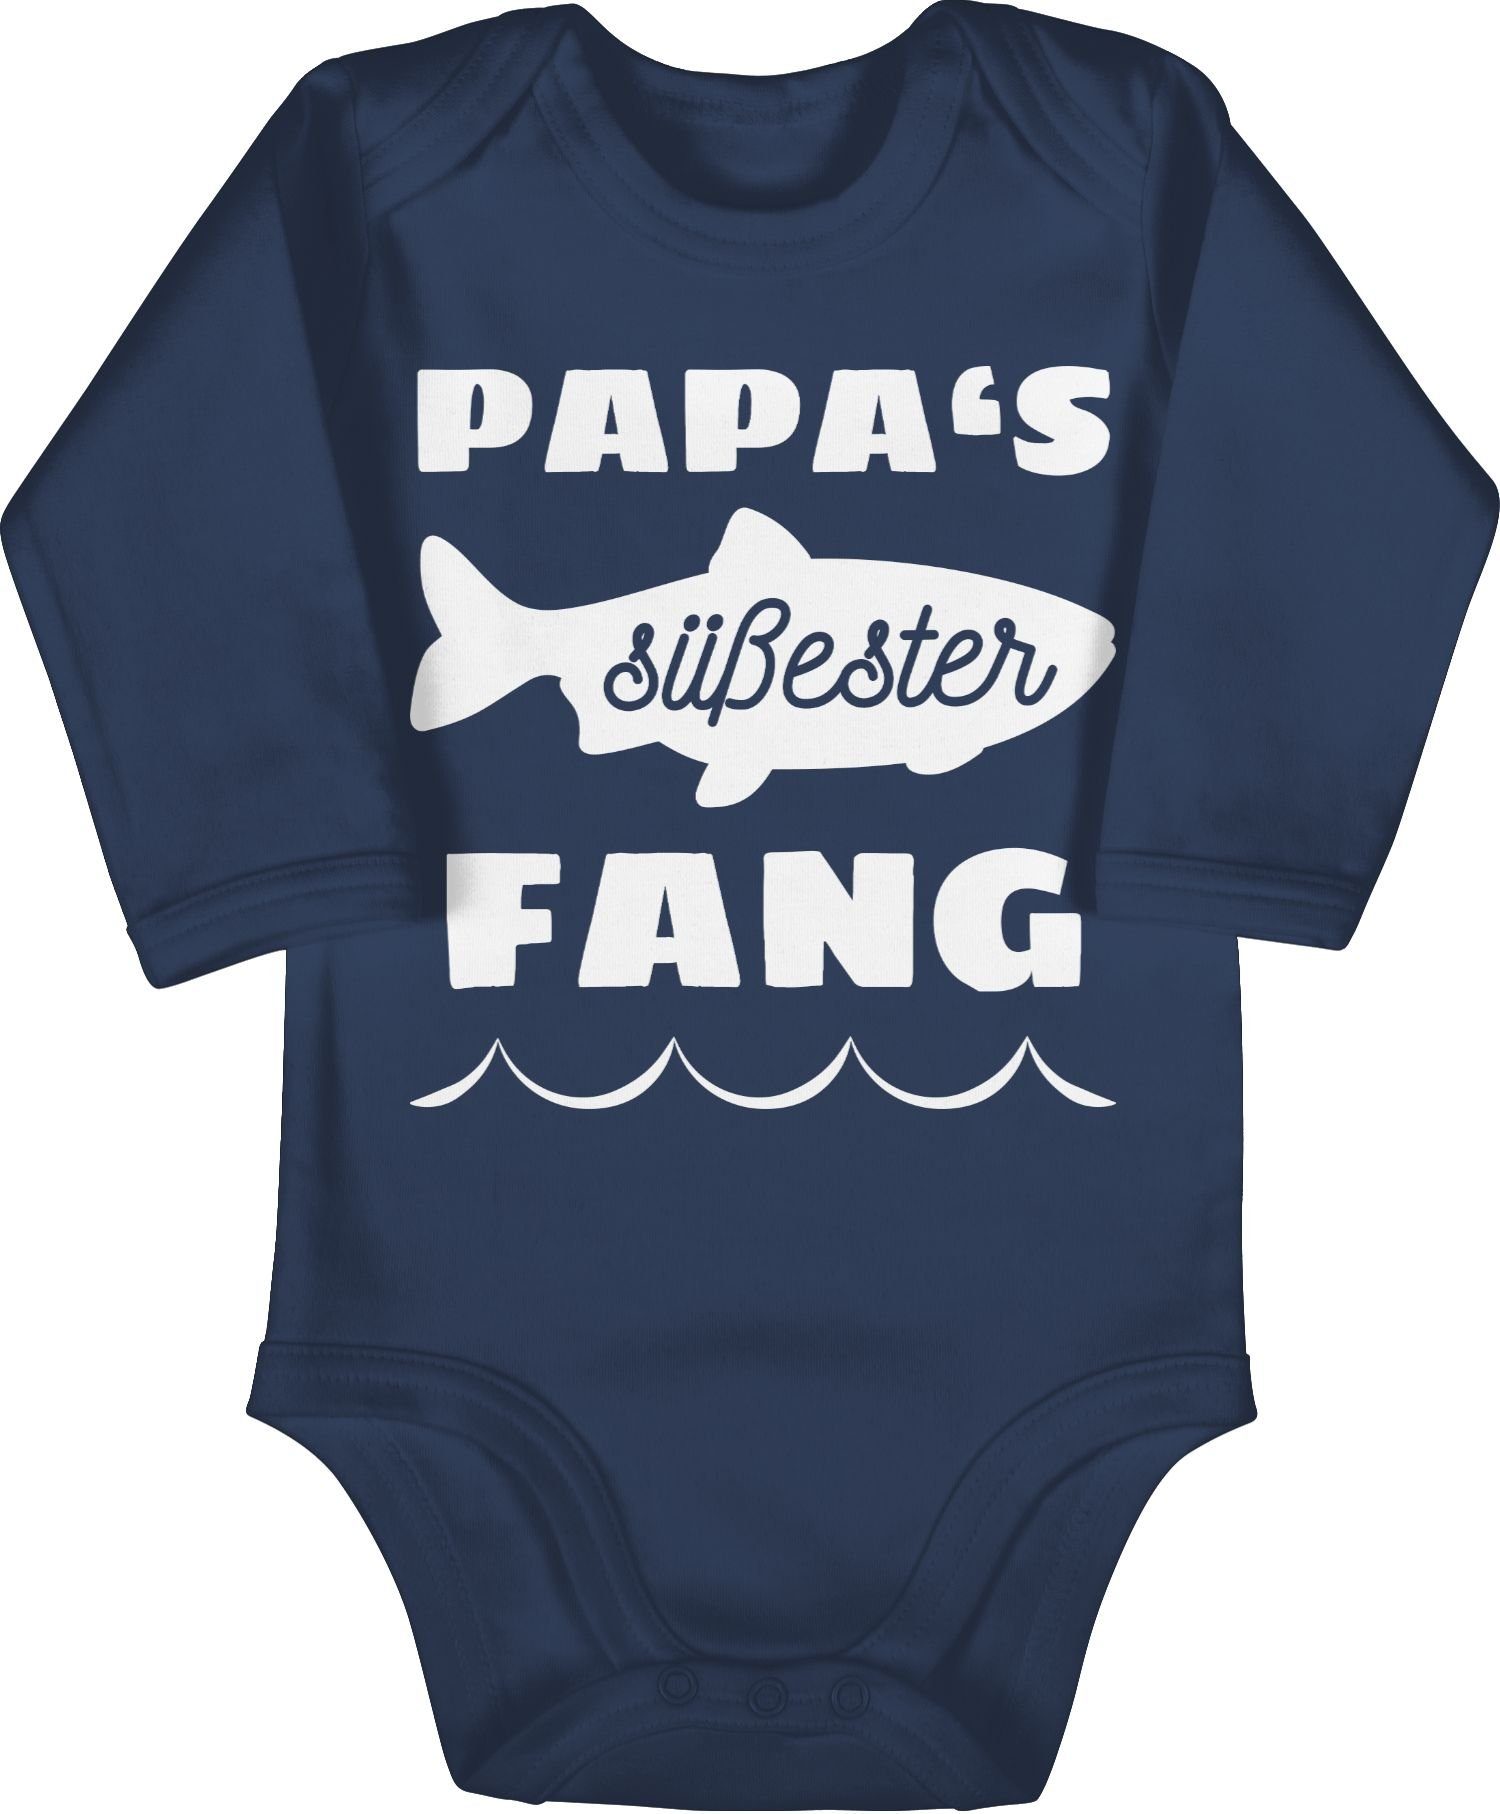 Blau 2 Navy Geschenk Baby Shirtbody Fang süßester Papas Vatertag Shirtracer